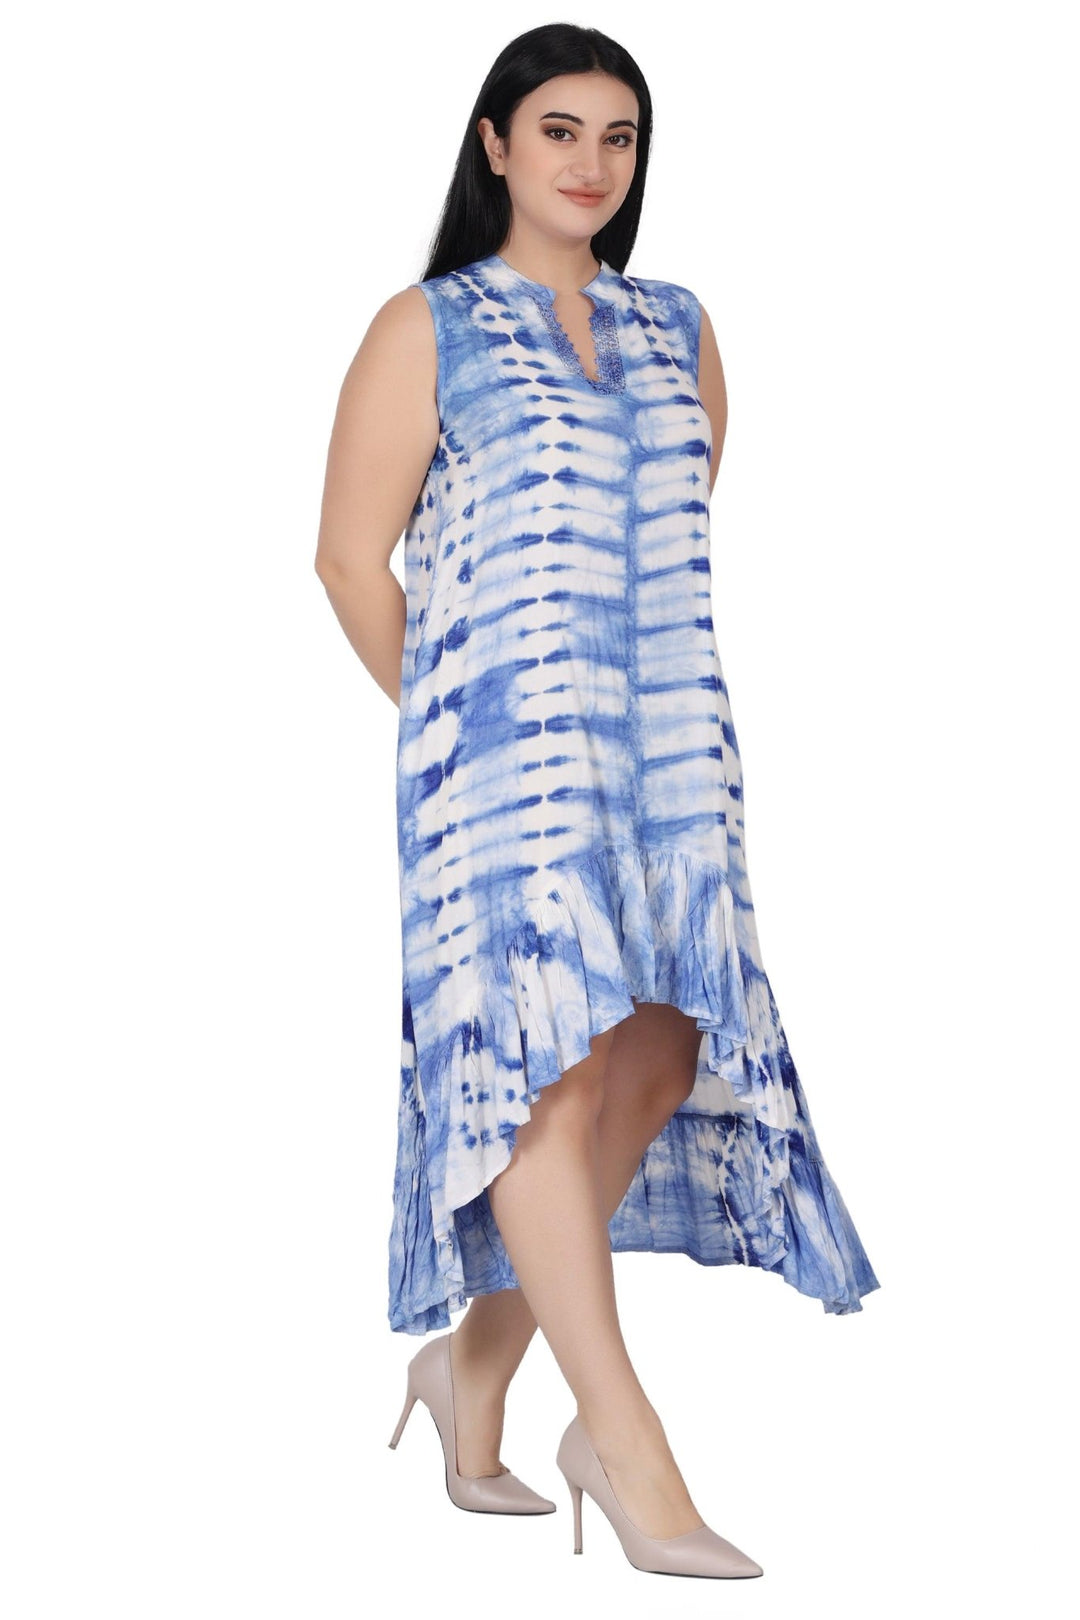 Laced V-Neck Tie Dye Dress 482133 - Advance Apparels Inc